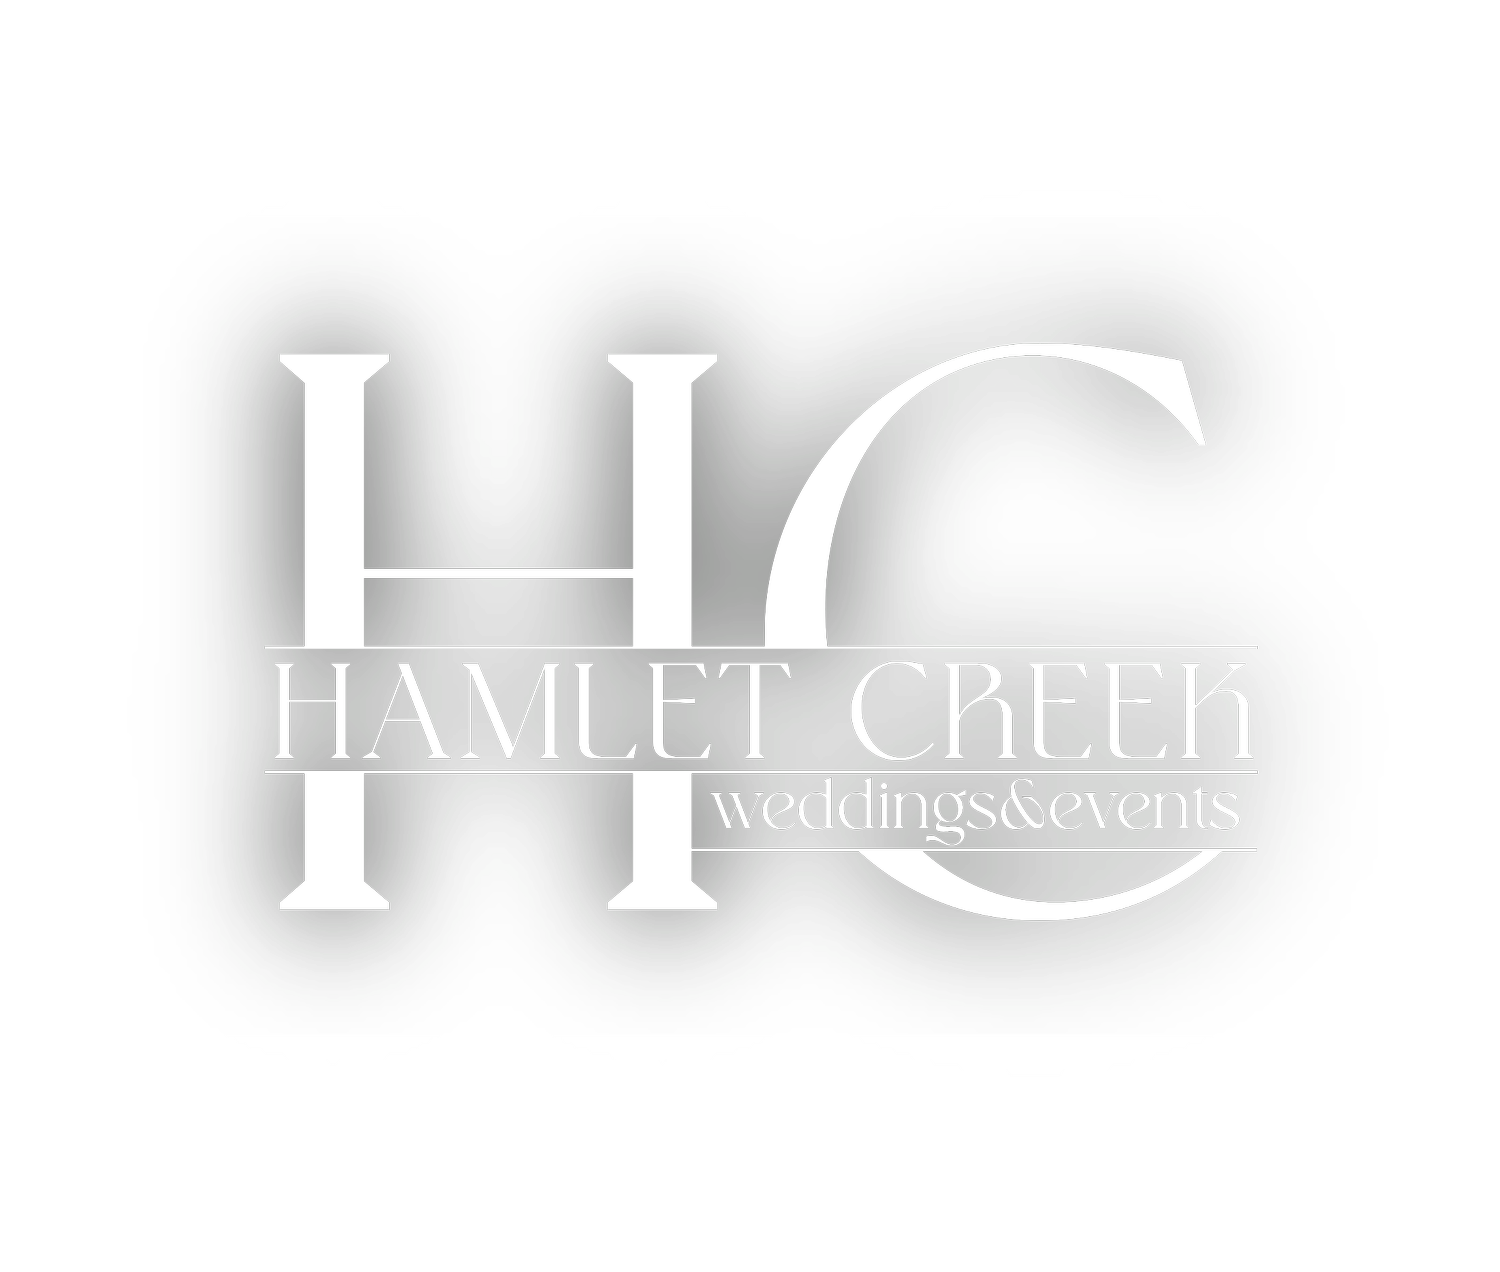 Hamlet Creek